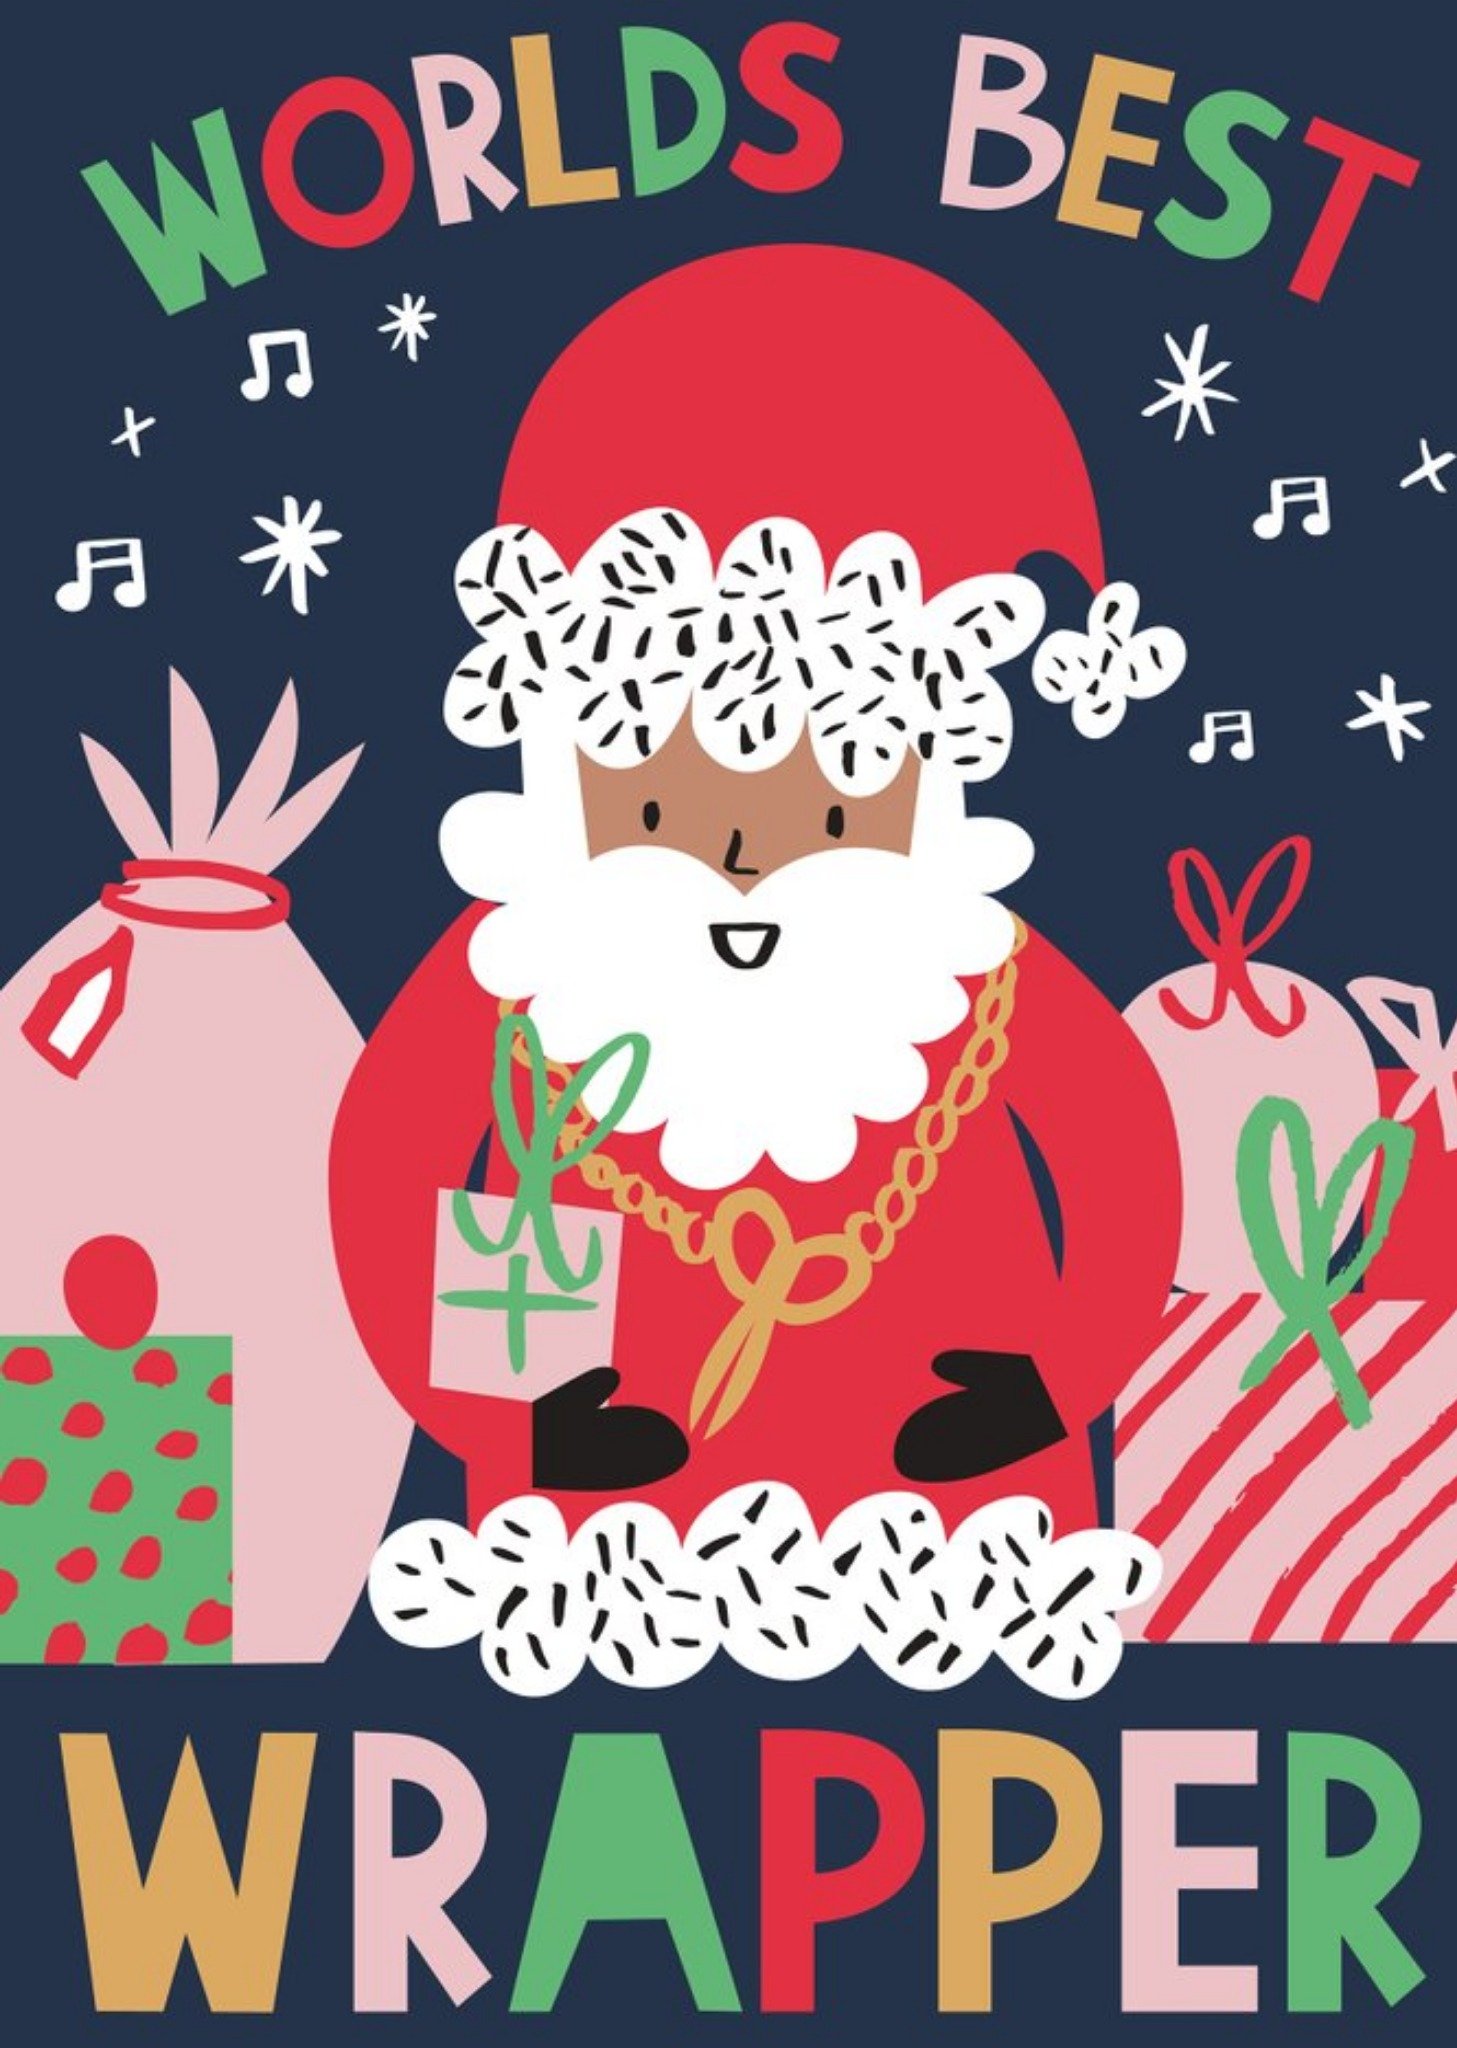 Rumble Cards Worlds Best Wrapper Hip Santa Illustration Pun Christmas Card, Large